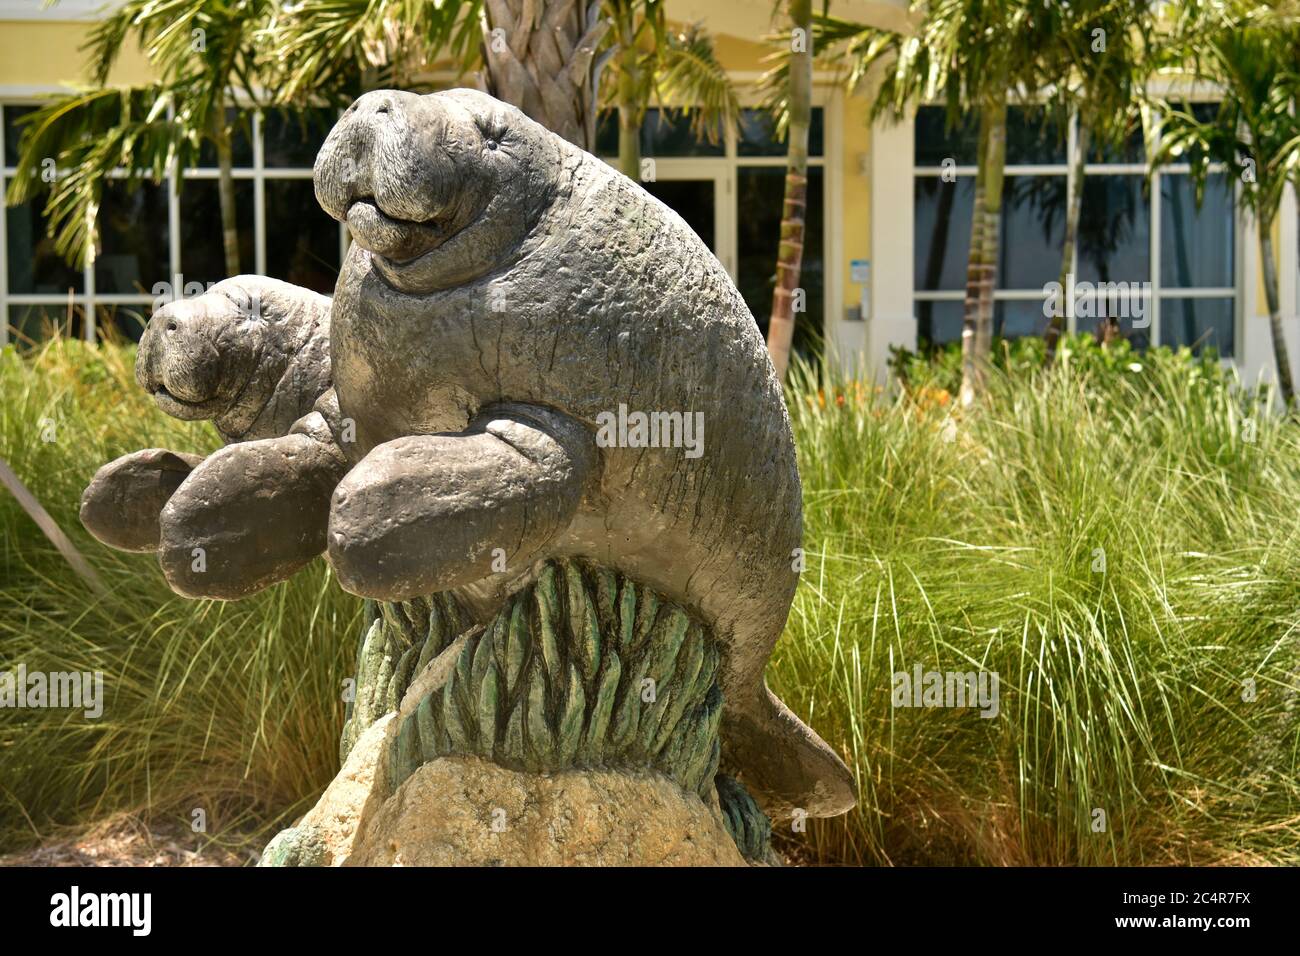 Manatee statue at the Manatee Lagoon Discovery Center, West Palm Beach, Florida, USA Stock Photo